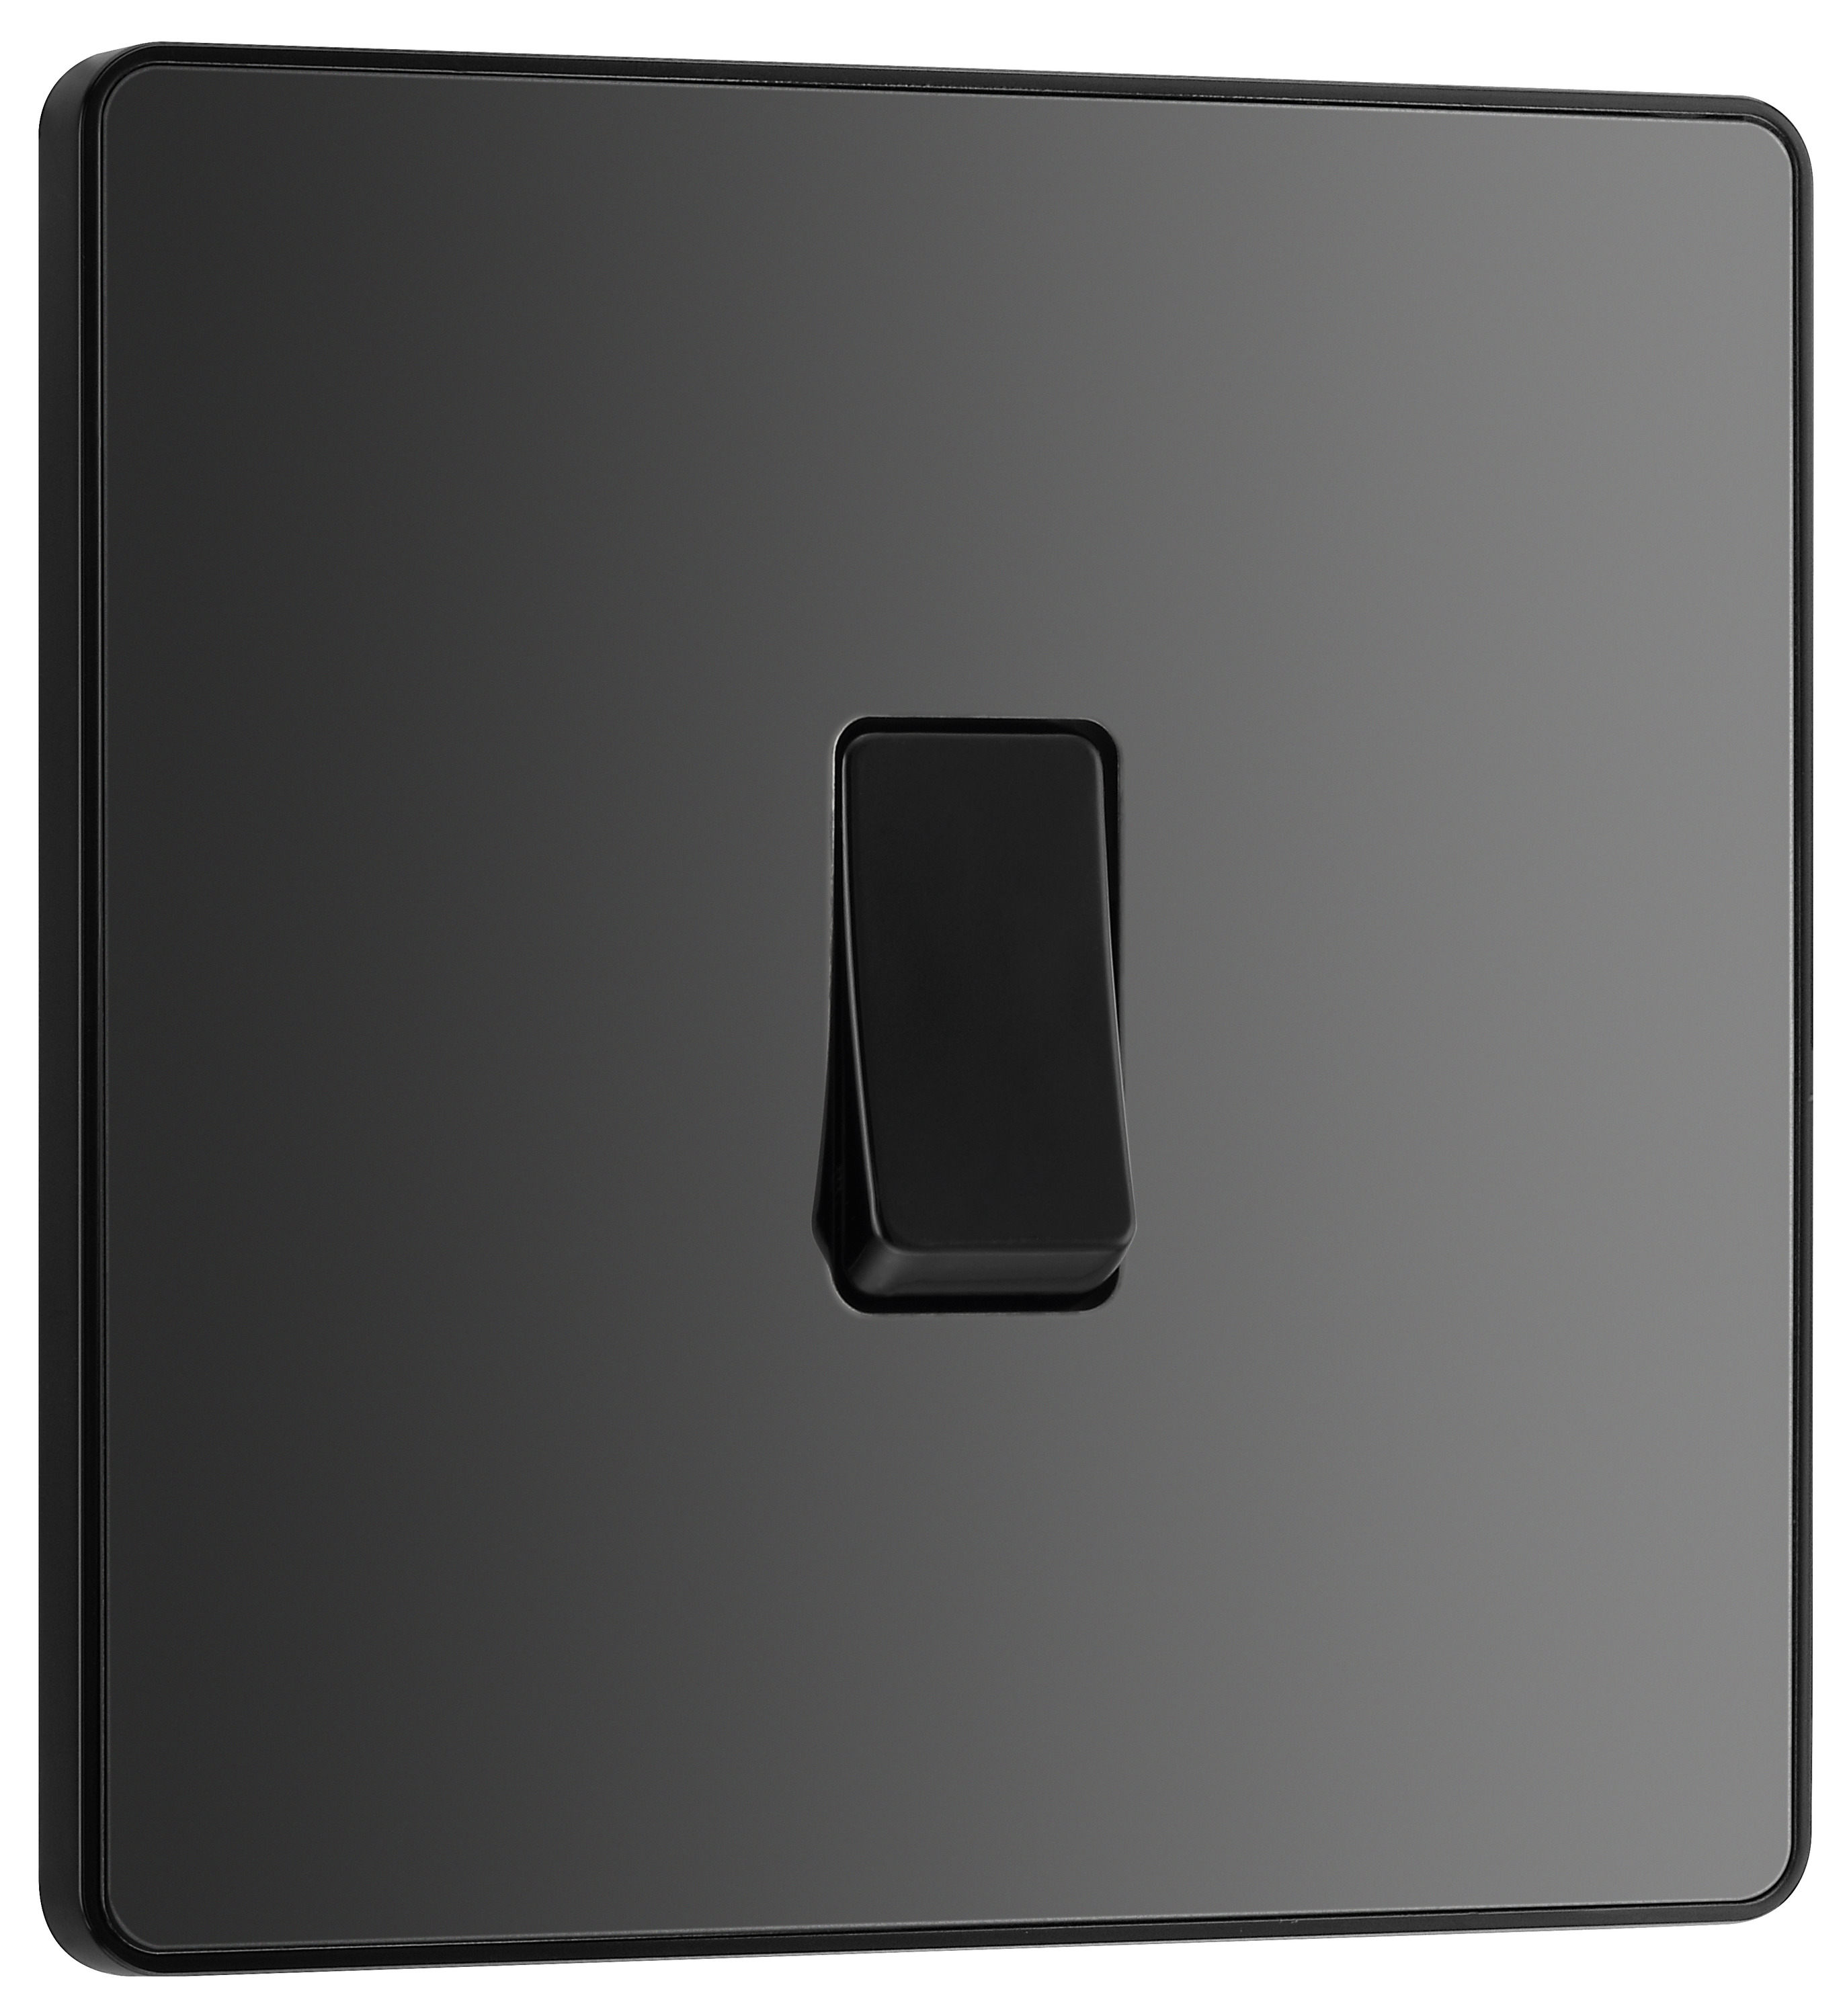 Image of BG Evolve Black Chrome 20A 16Ax Single Intermediate Light Switch